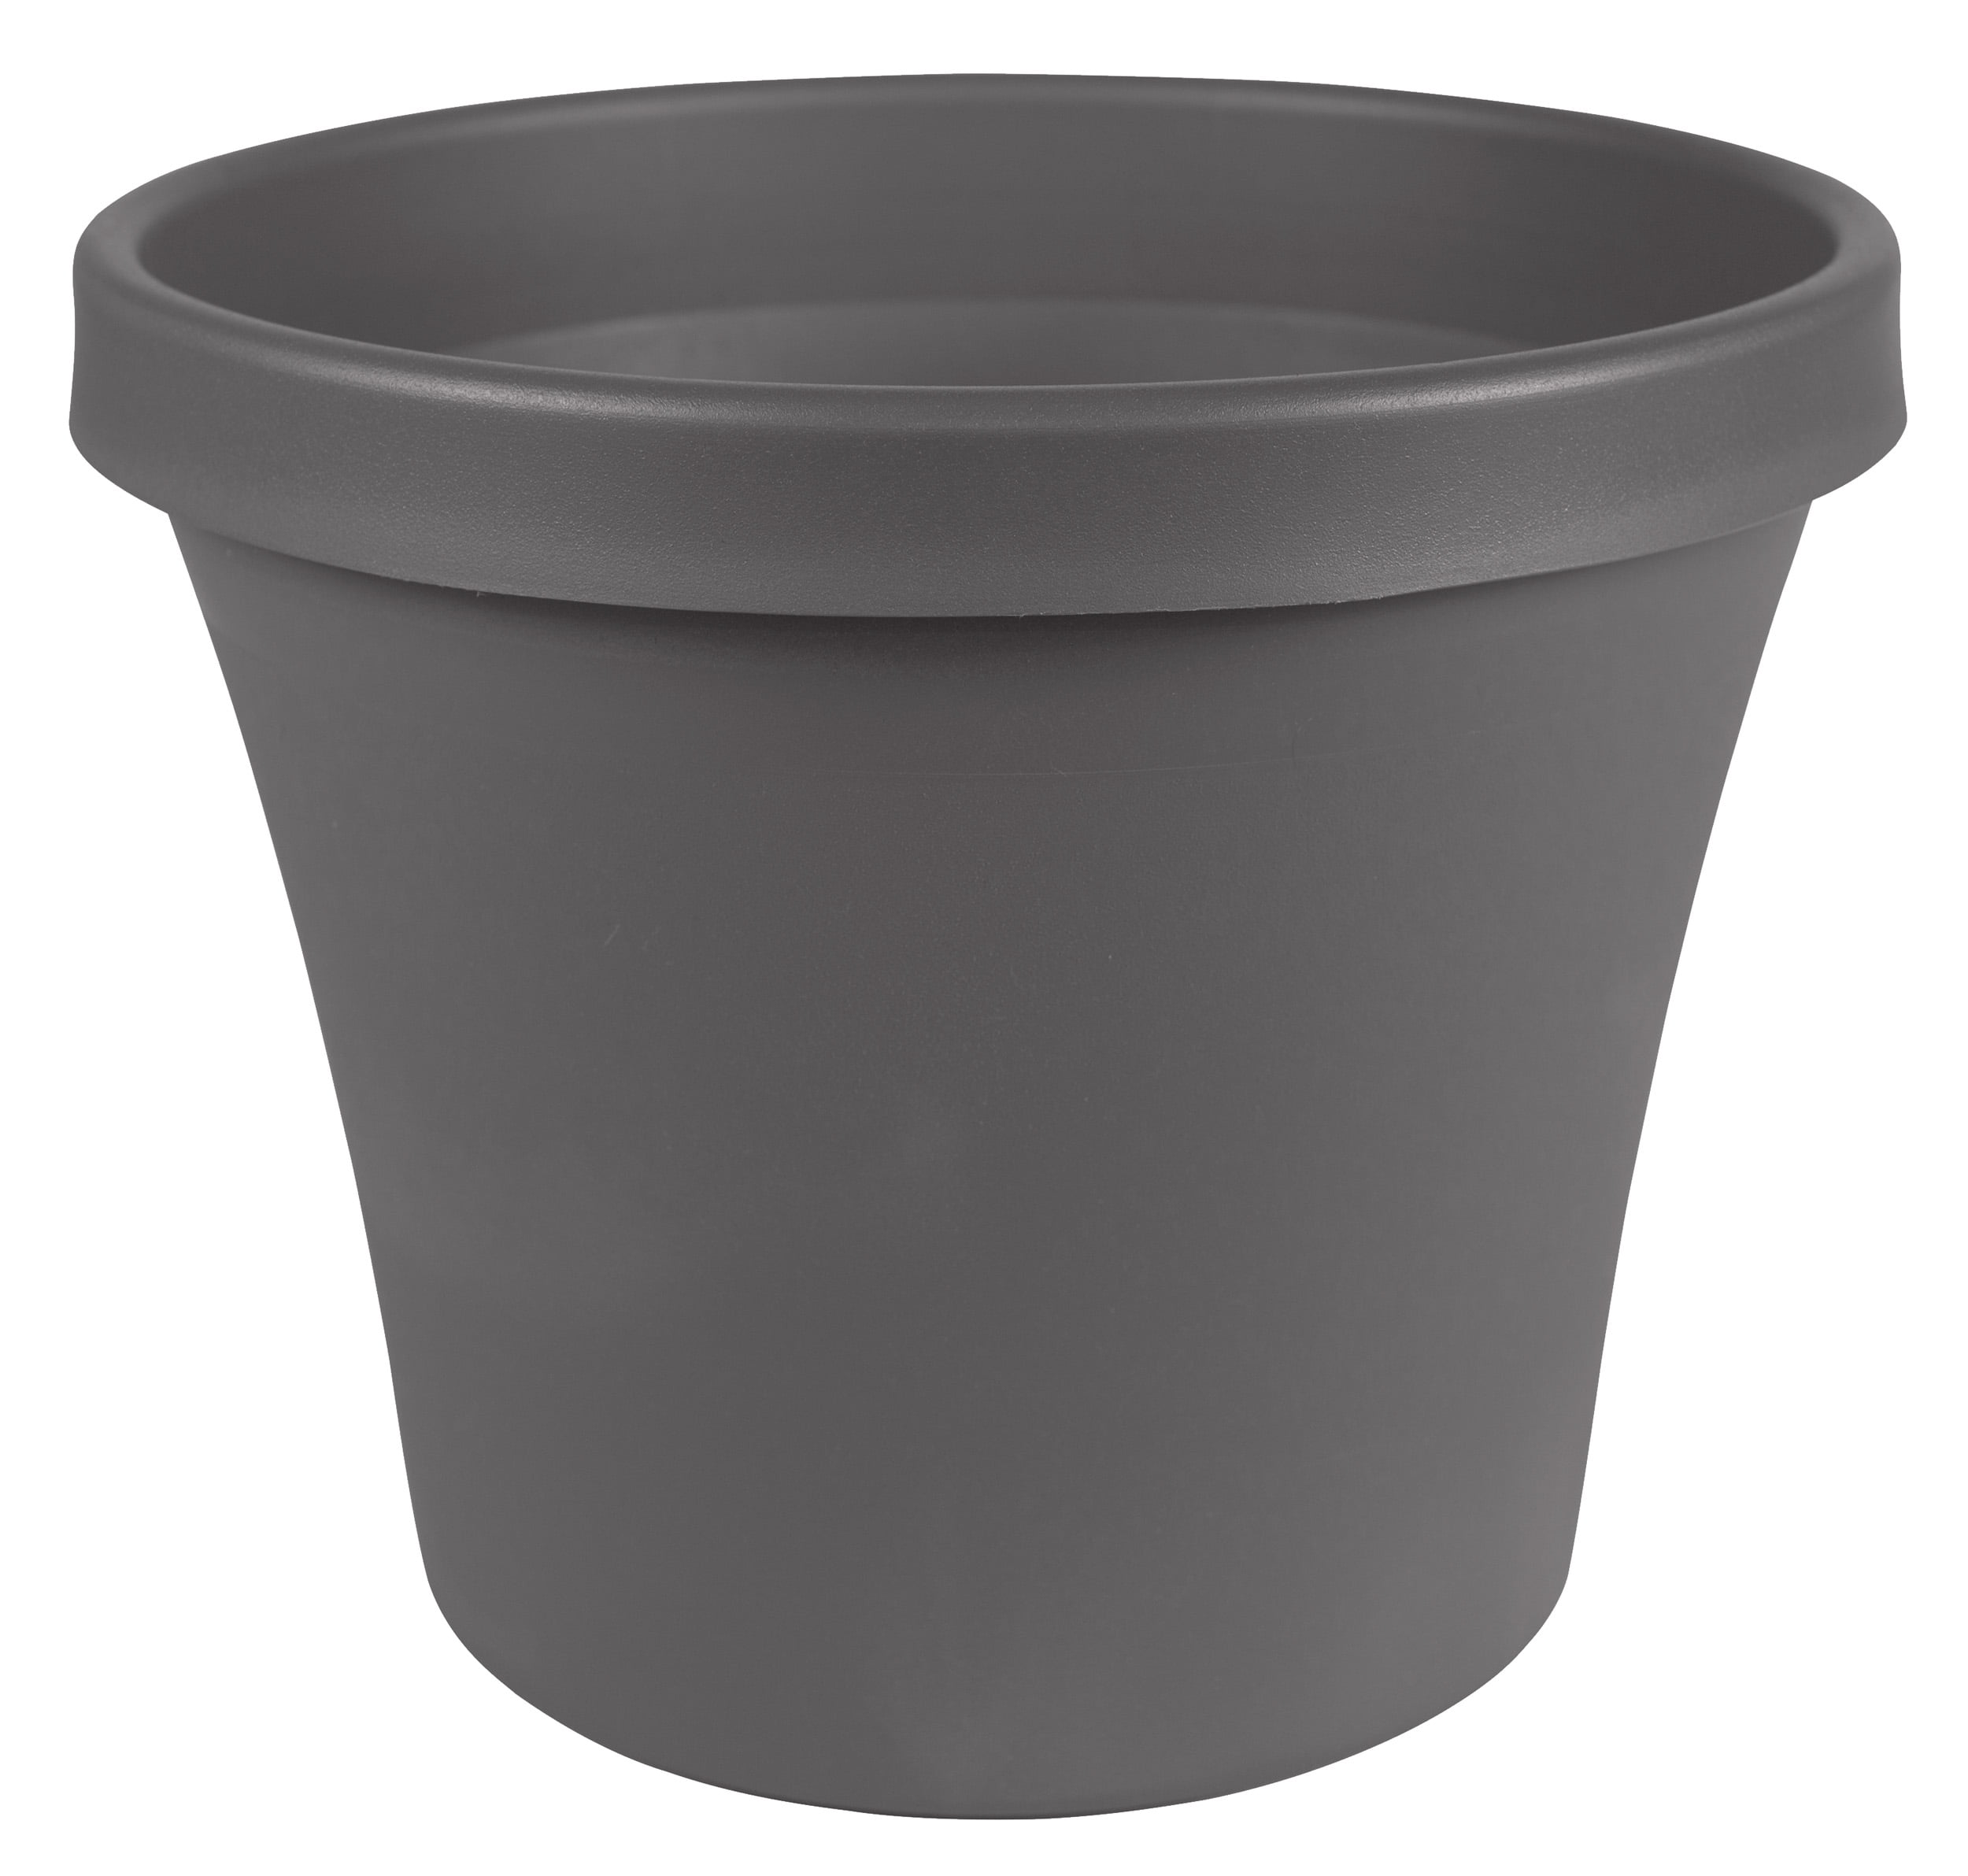 10 NEW 4.5"inch Standard round plastic flower pots 4.5” X 3.75” 